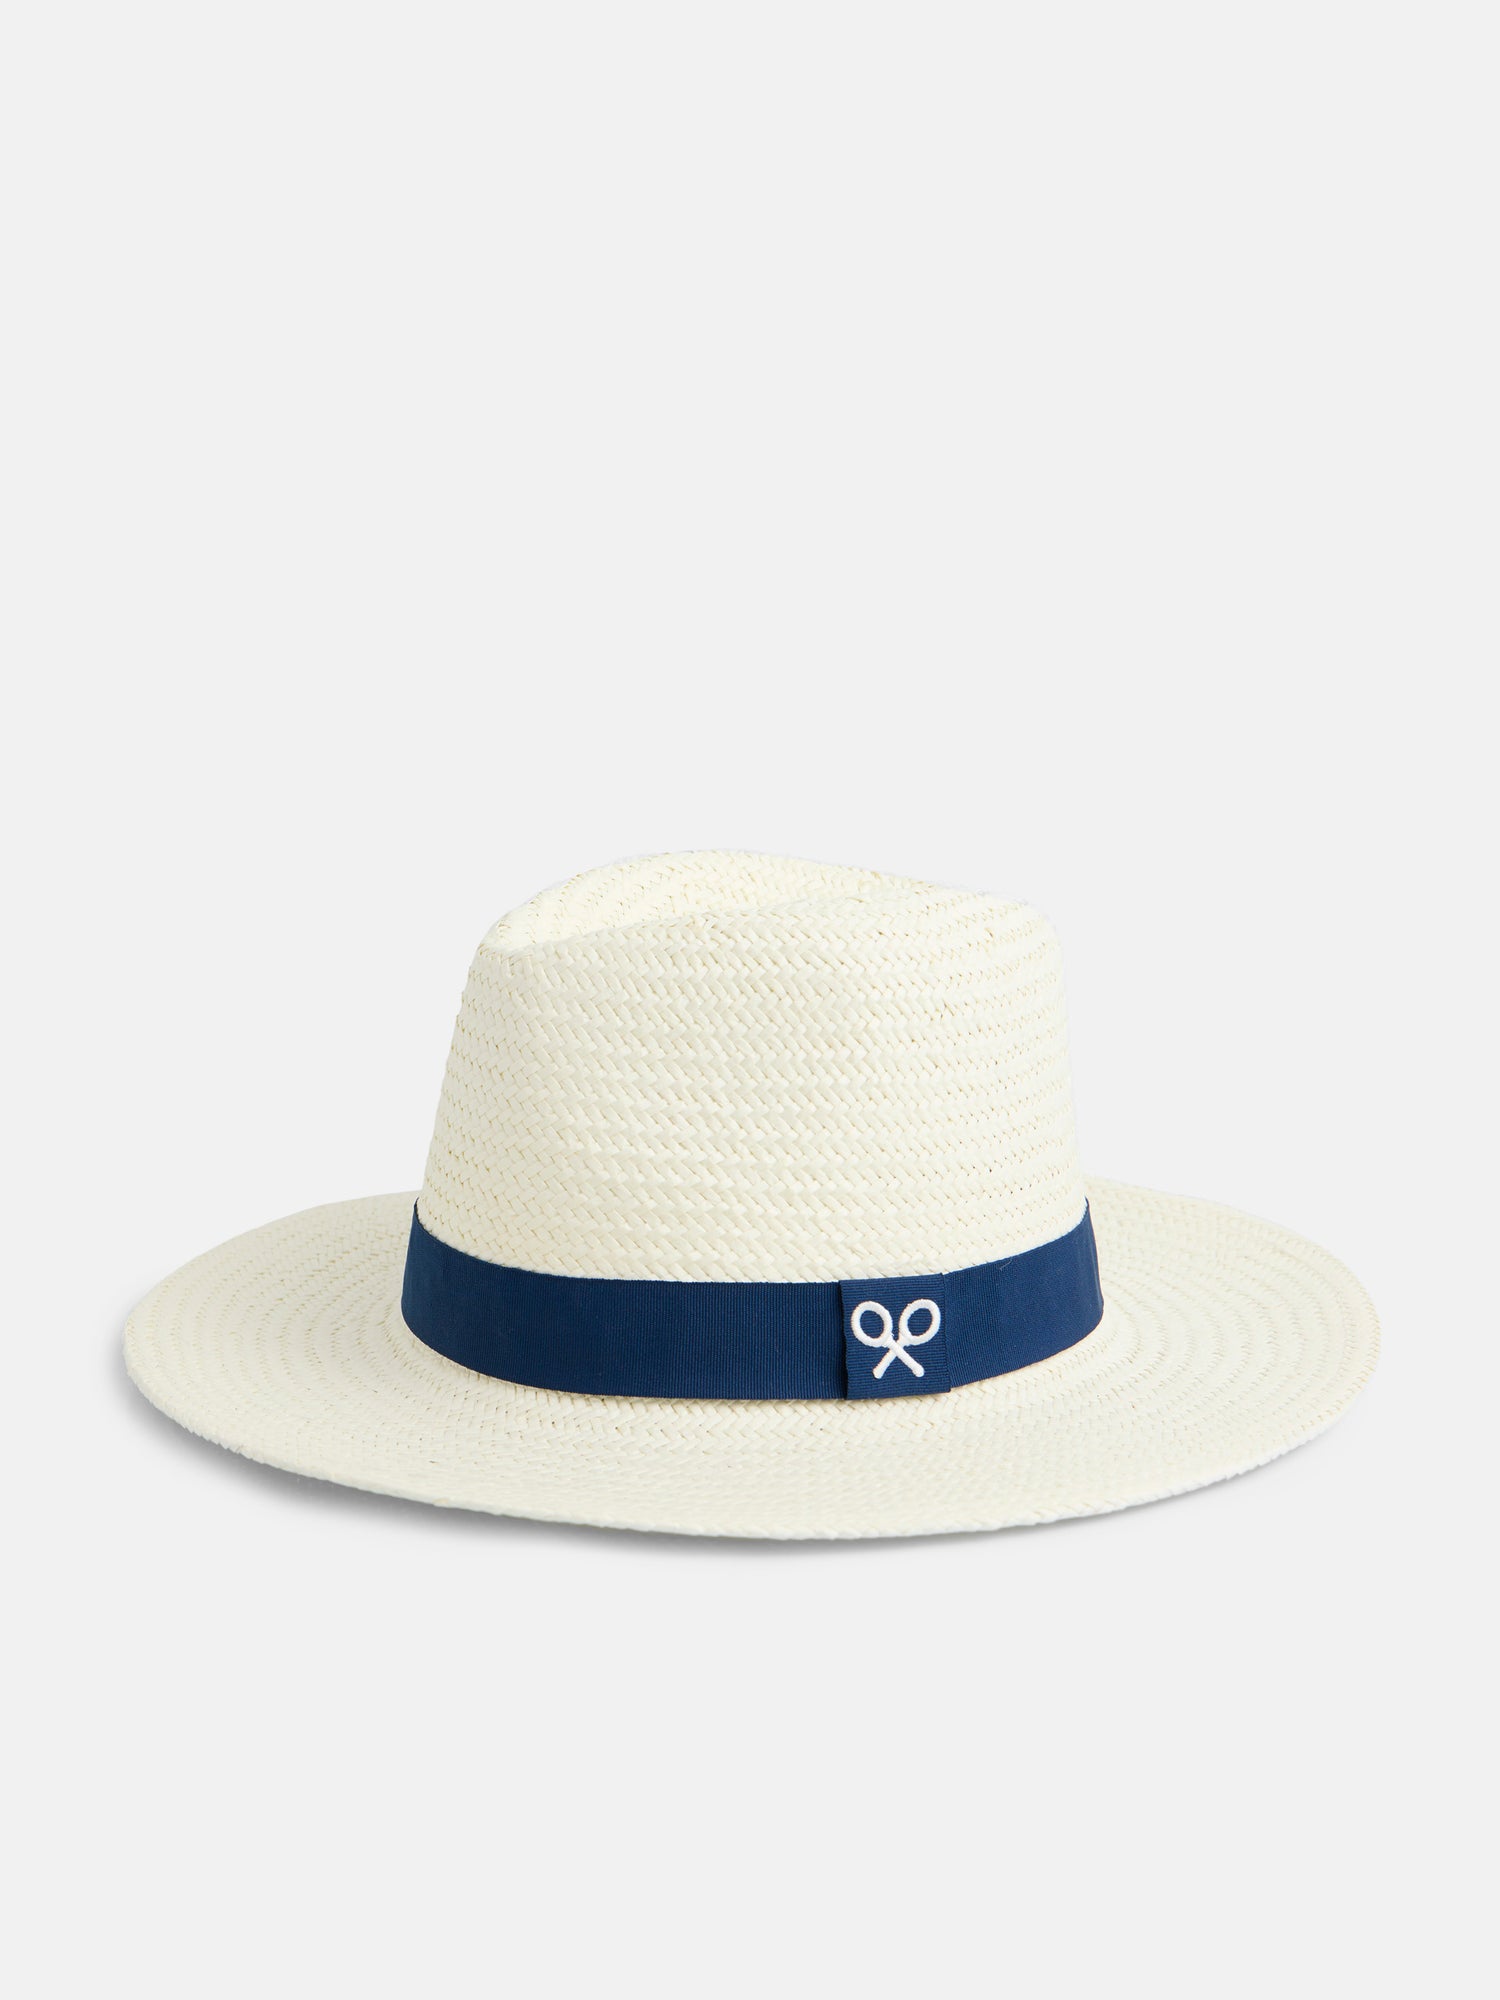 Chapeau en silbon ruban bleu marine